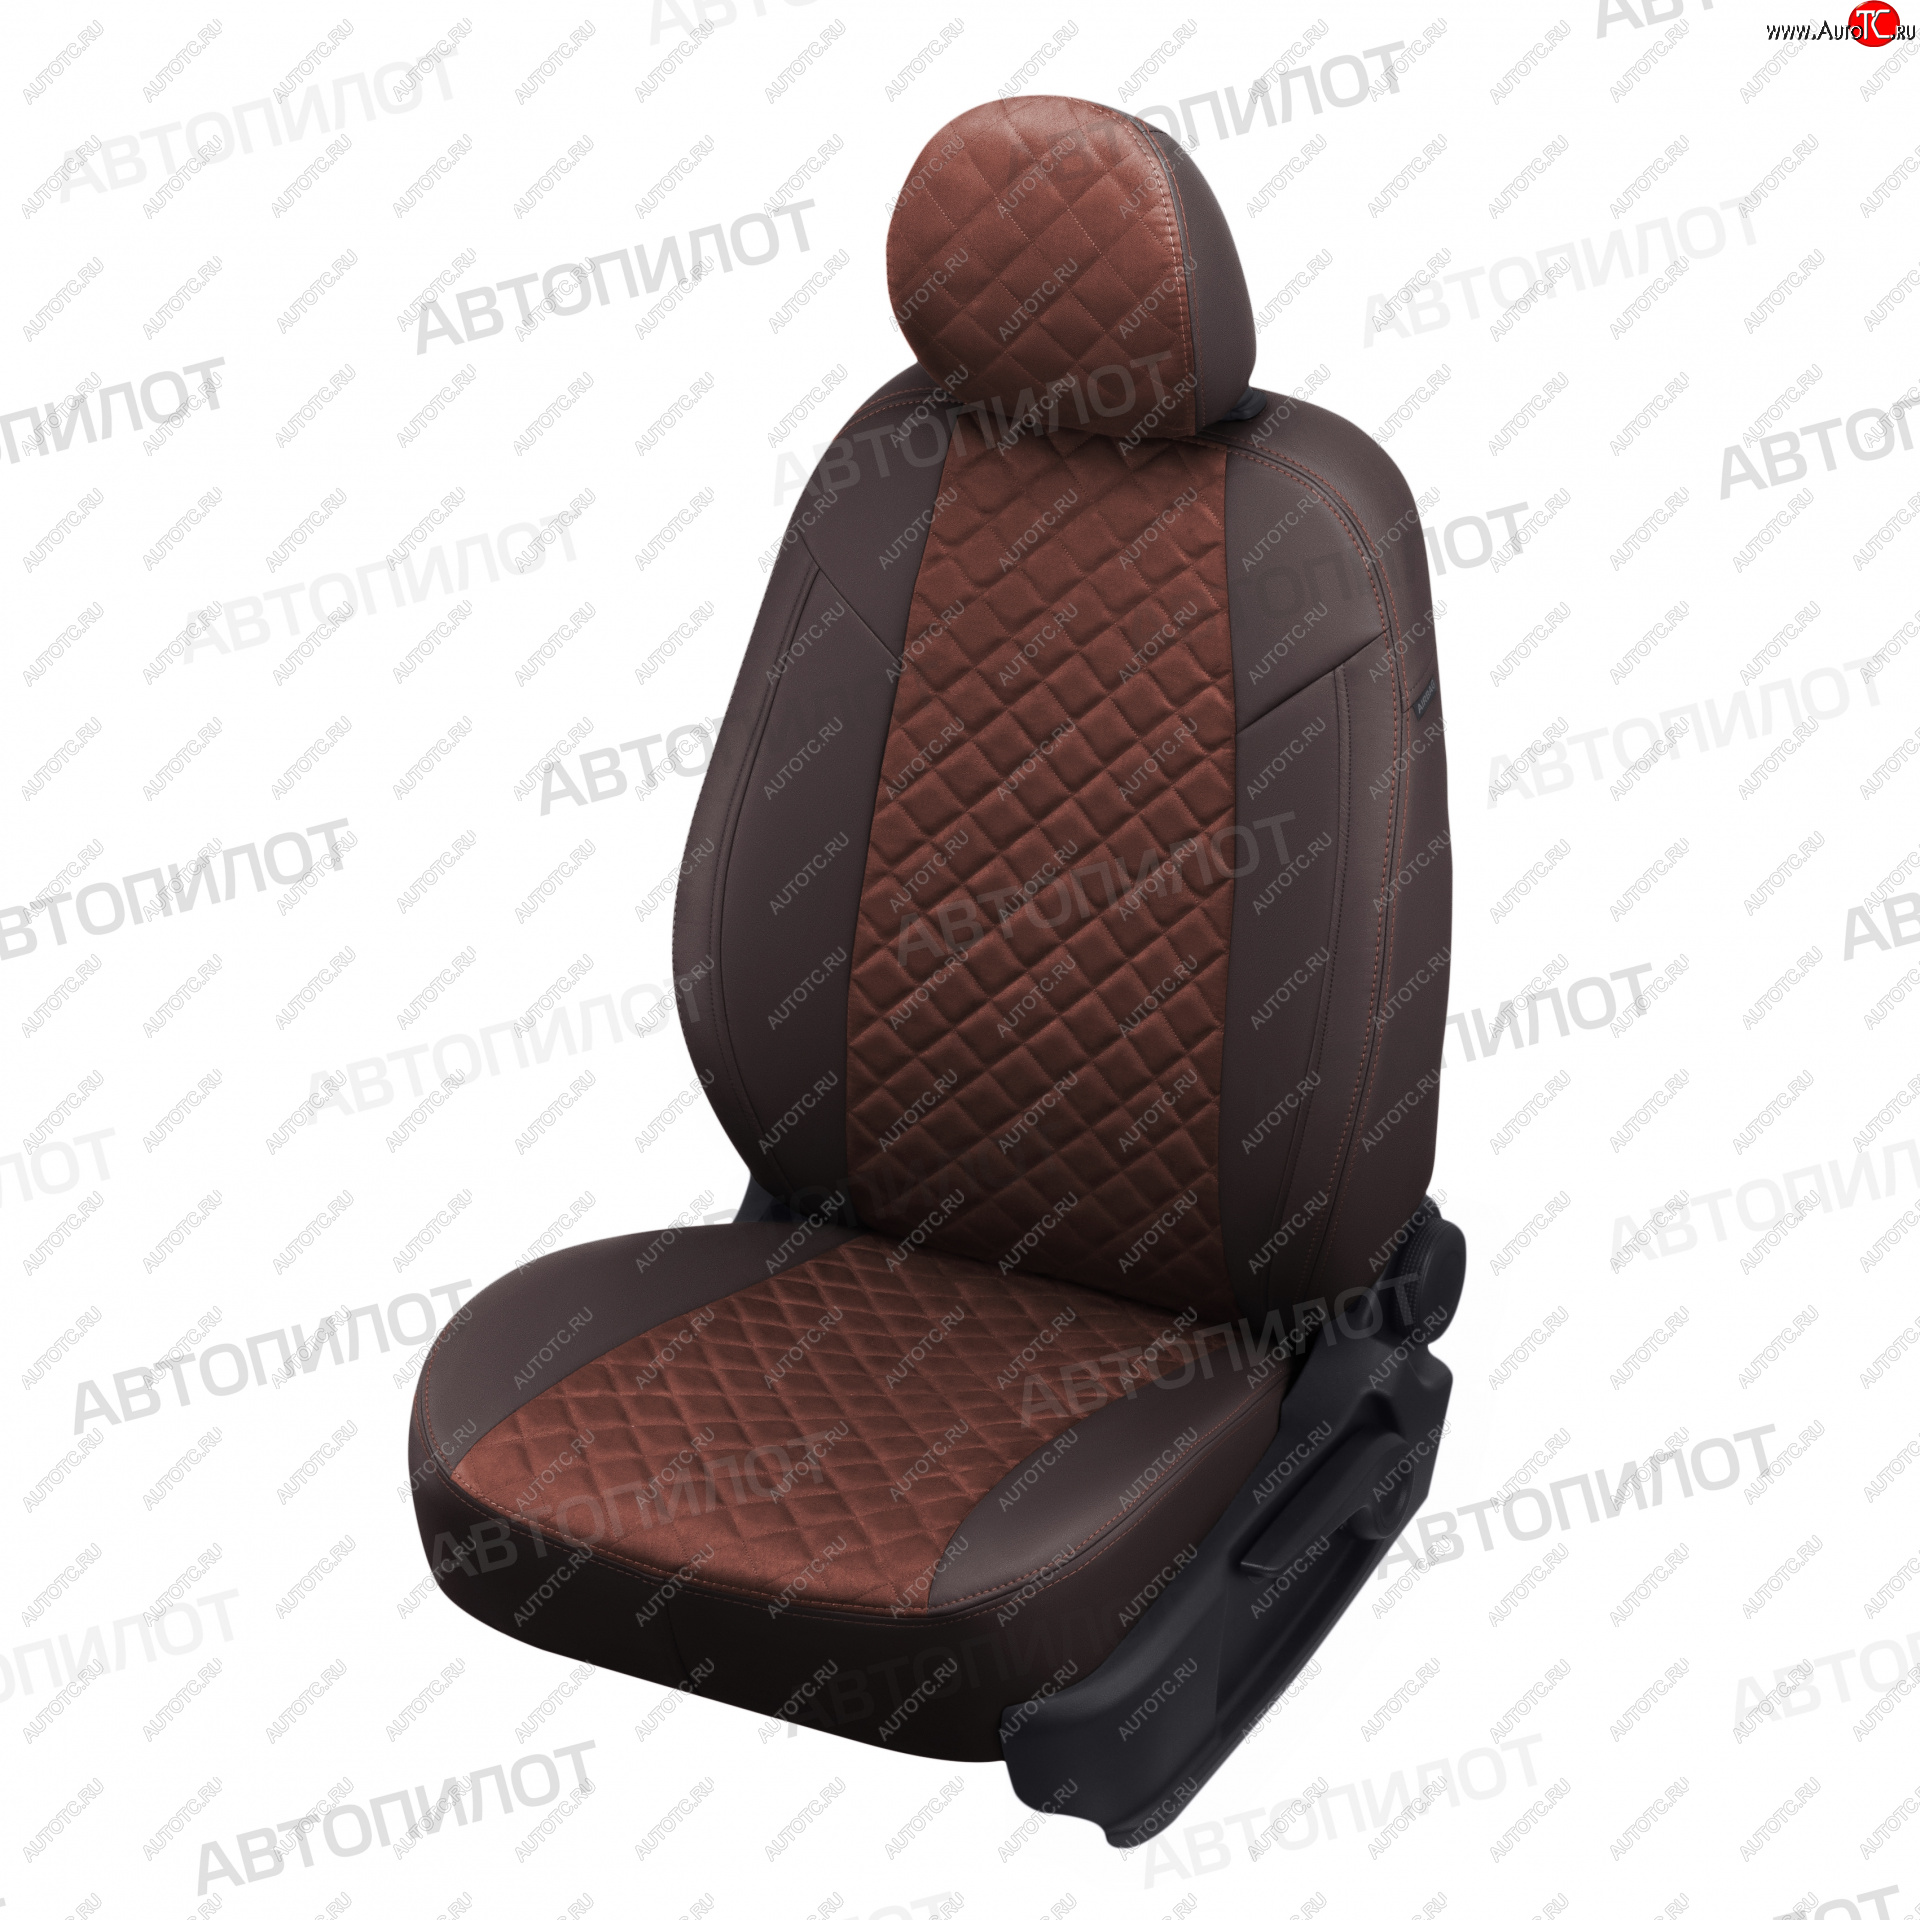 13 999 р. Чехлы сидений (экокожа/алькантара) Автопилот Ромб  Ford S-Max  1 (2006-2015) (шоколад)  с доставкой в г. Калуга